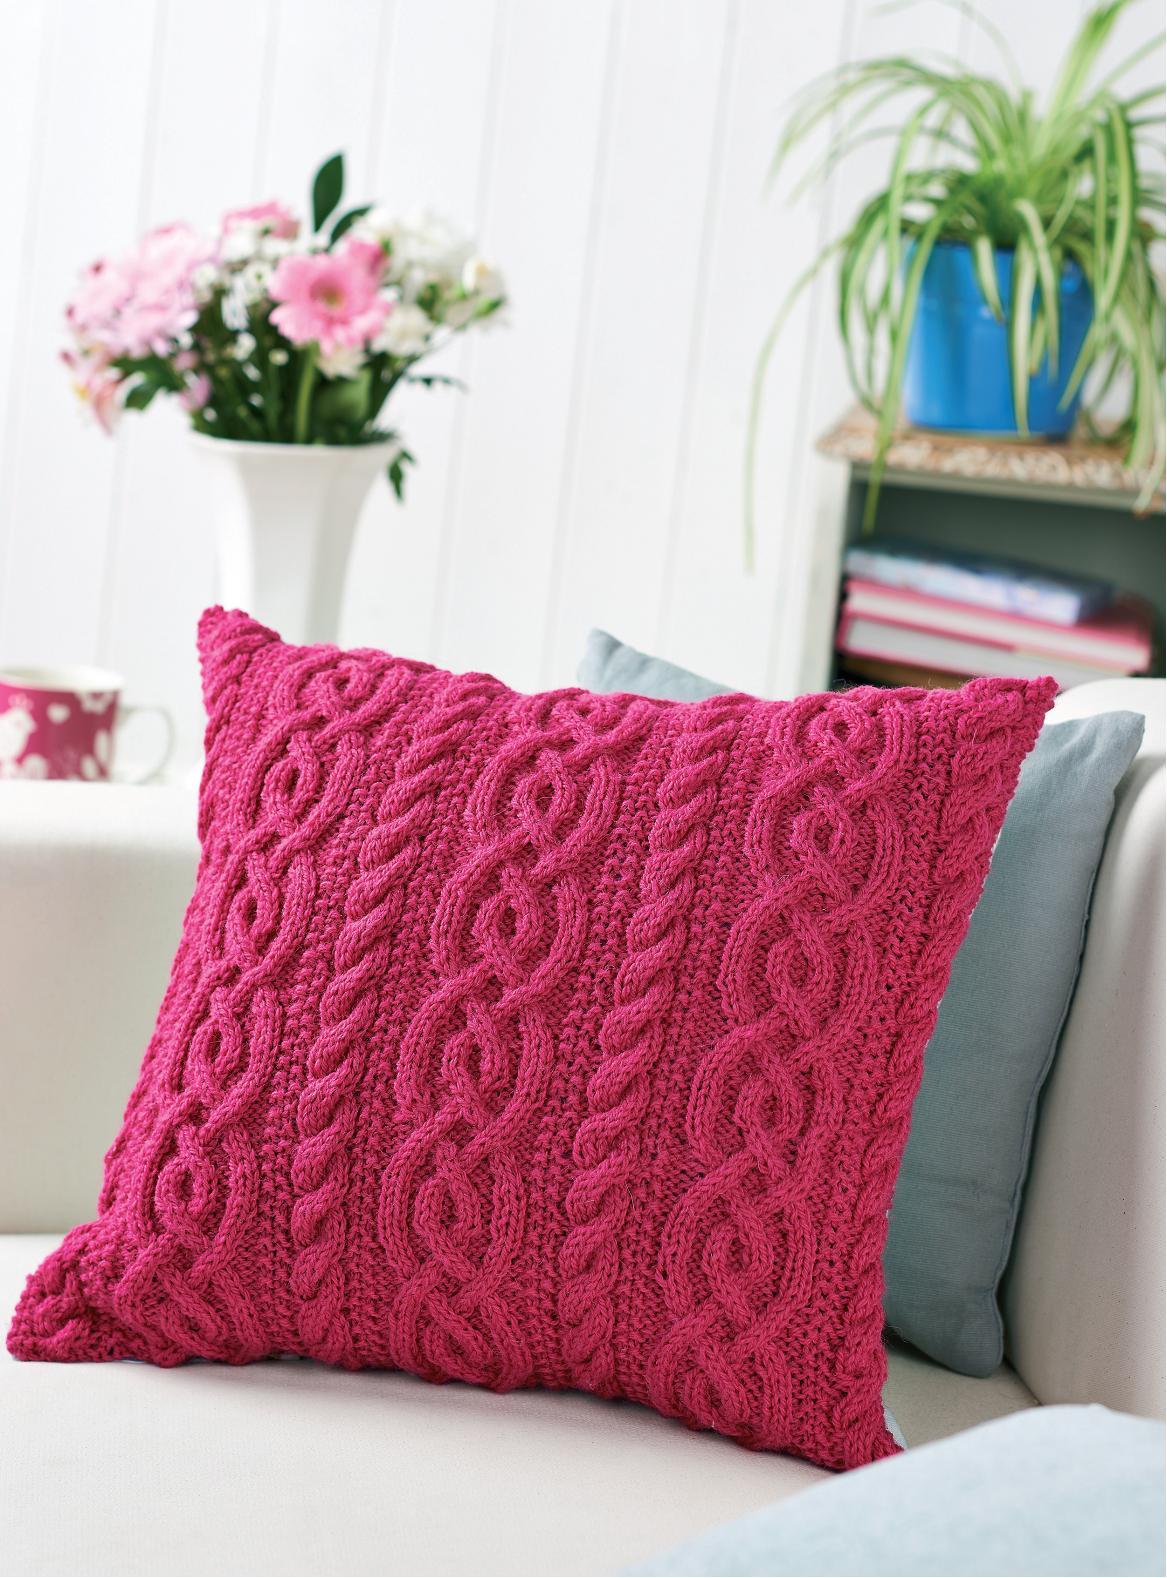 Cushion Knitting Patterns Let's Knit Magazine